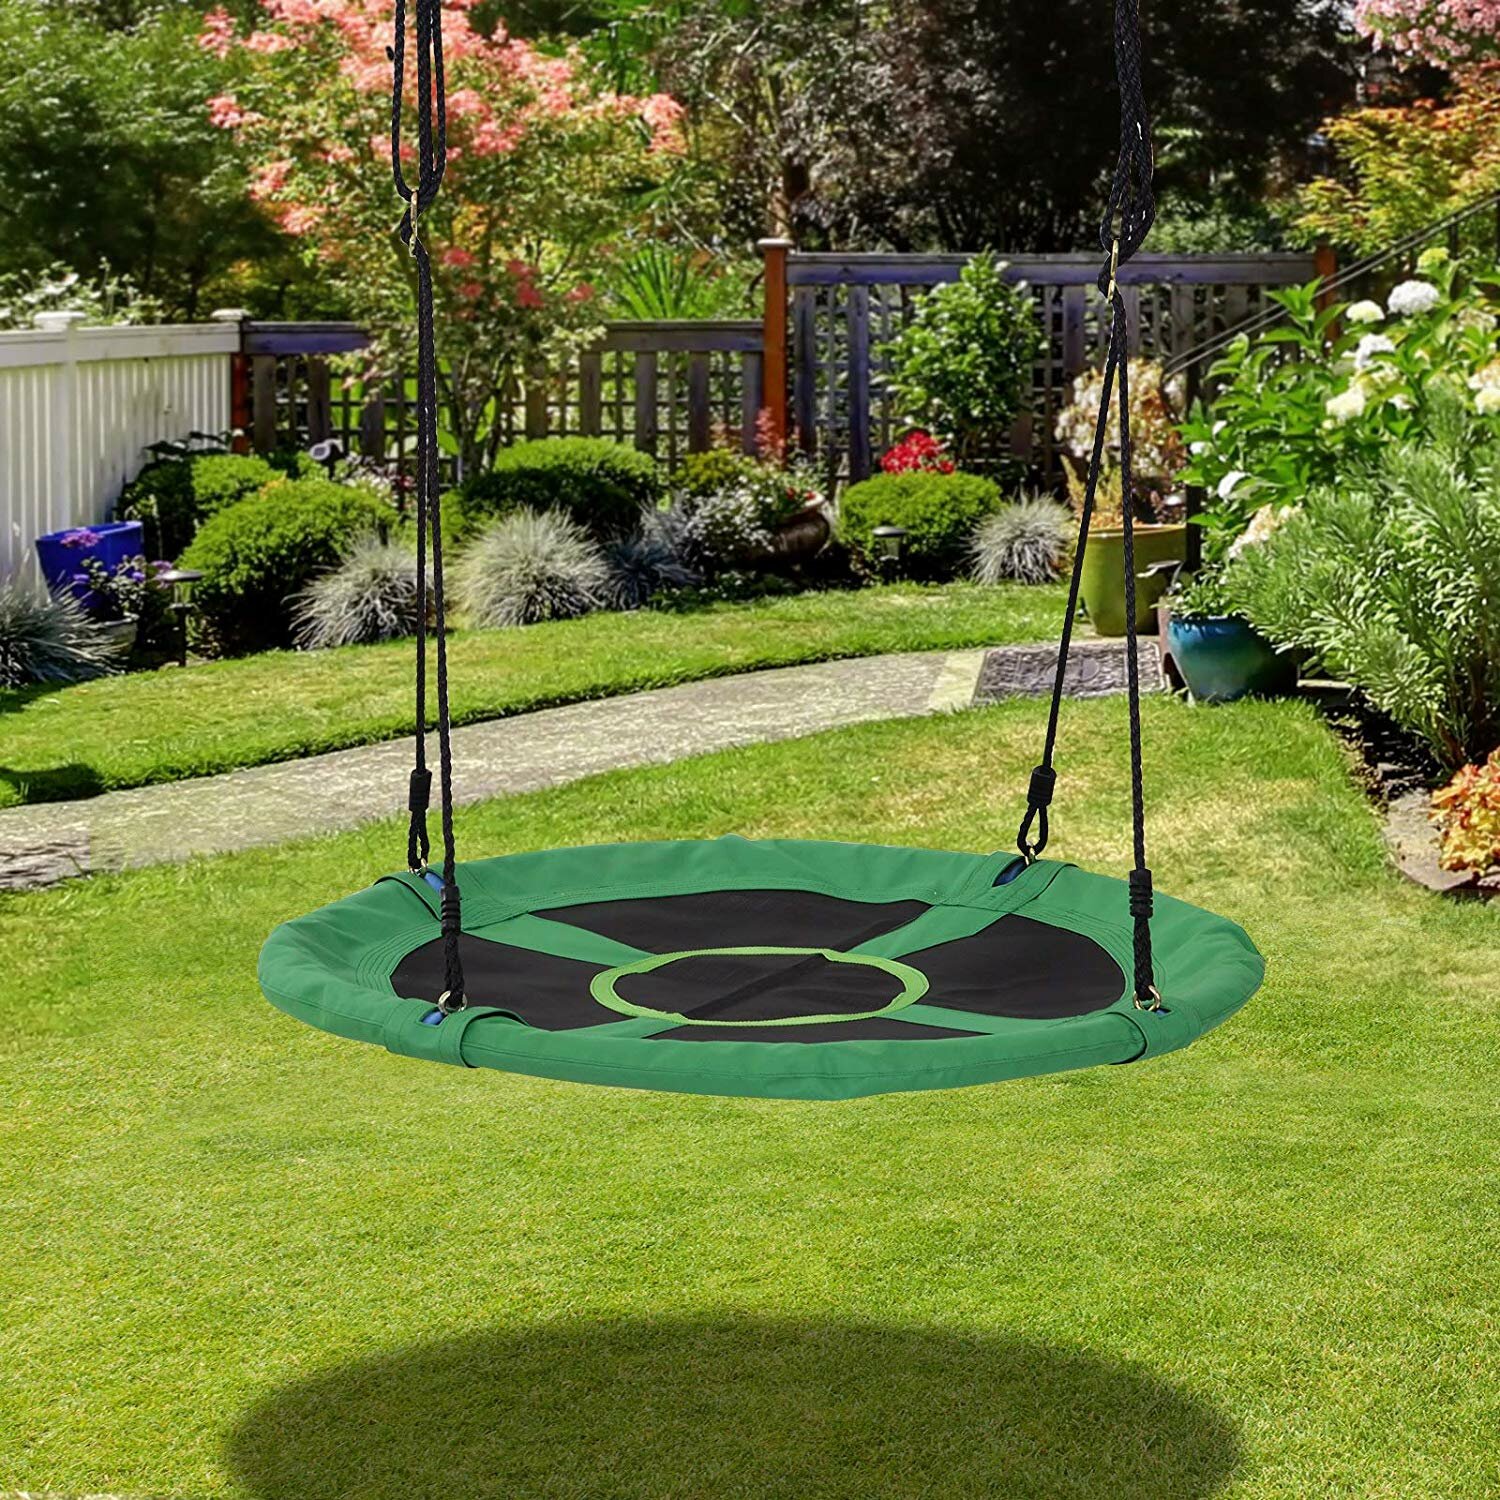 Details about   40" Kids Children Outdoor Flying Saucer Tree Swing Garden Backyard Green 700 lbs